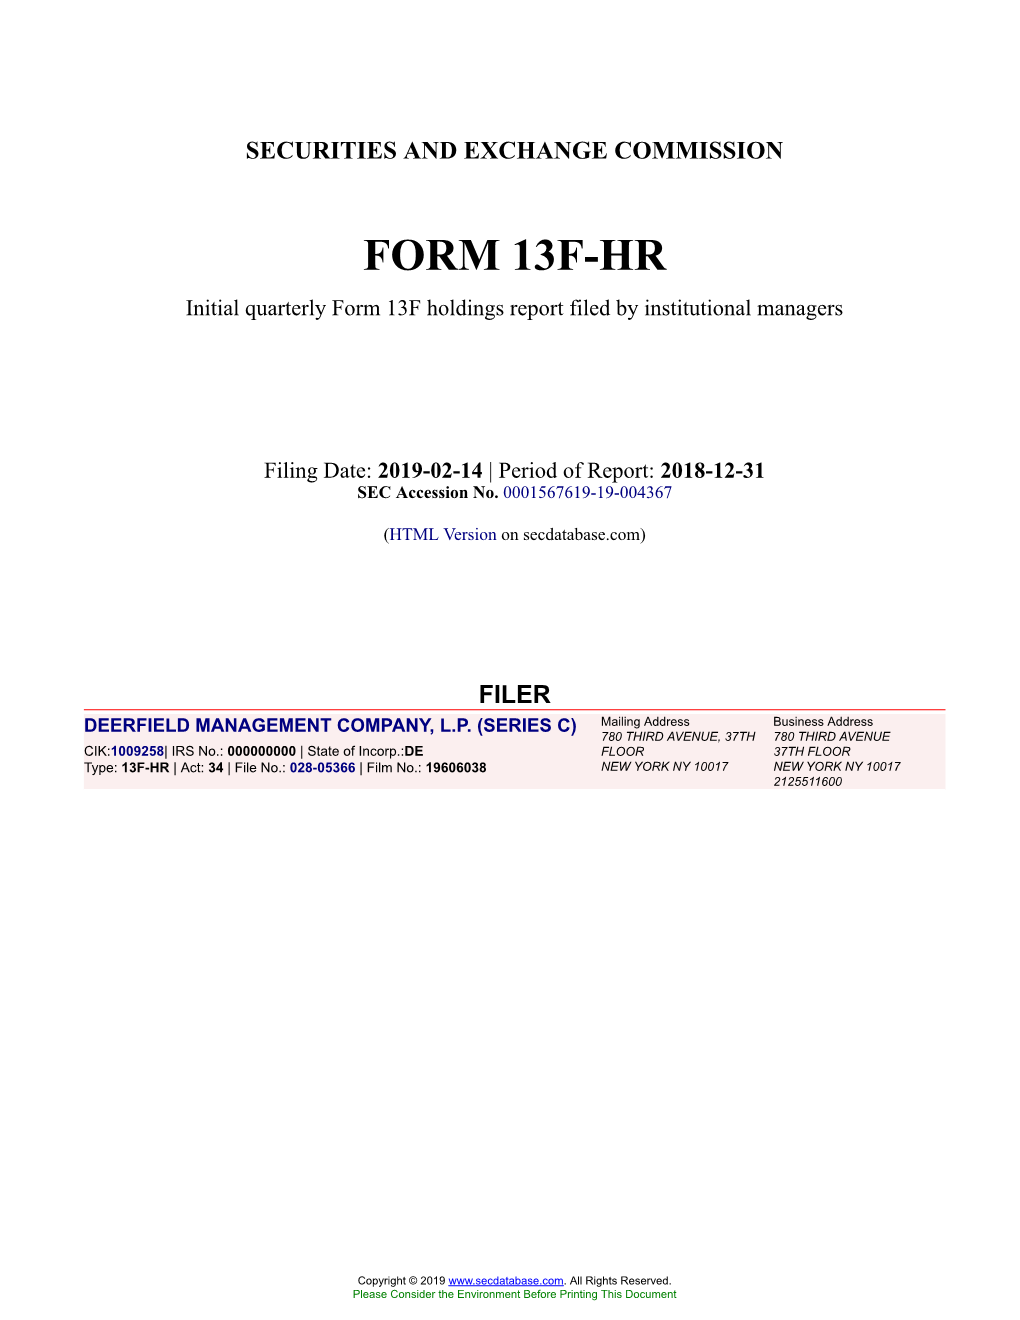 Form 13F-HR Filed 2019-02-14